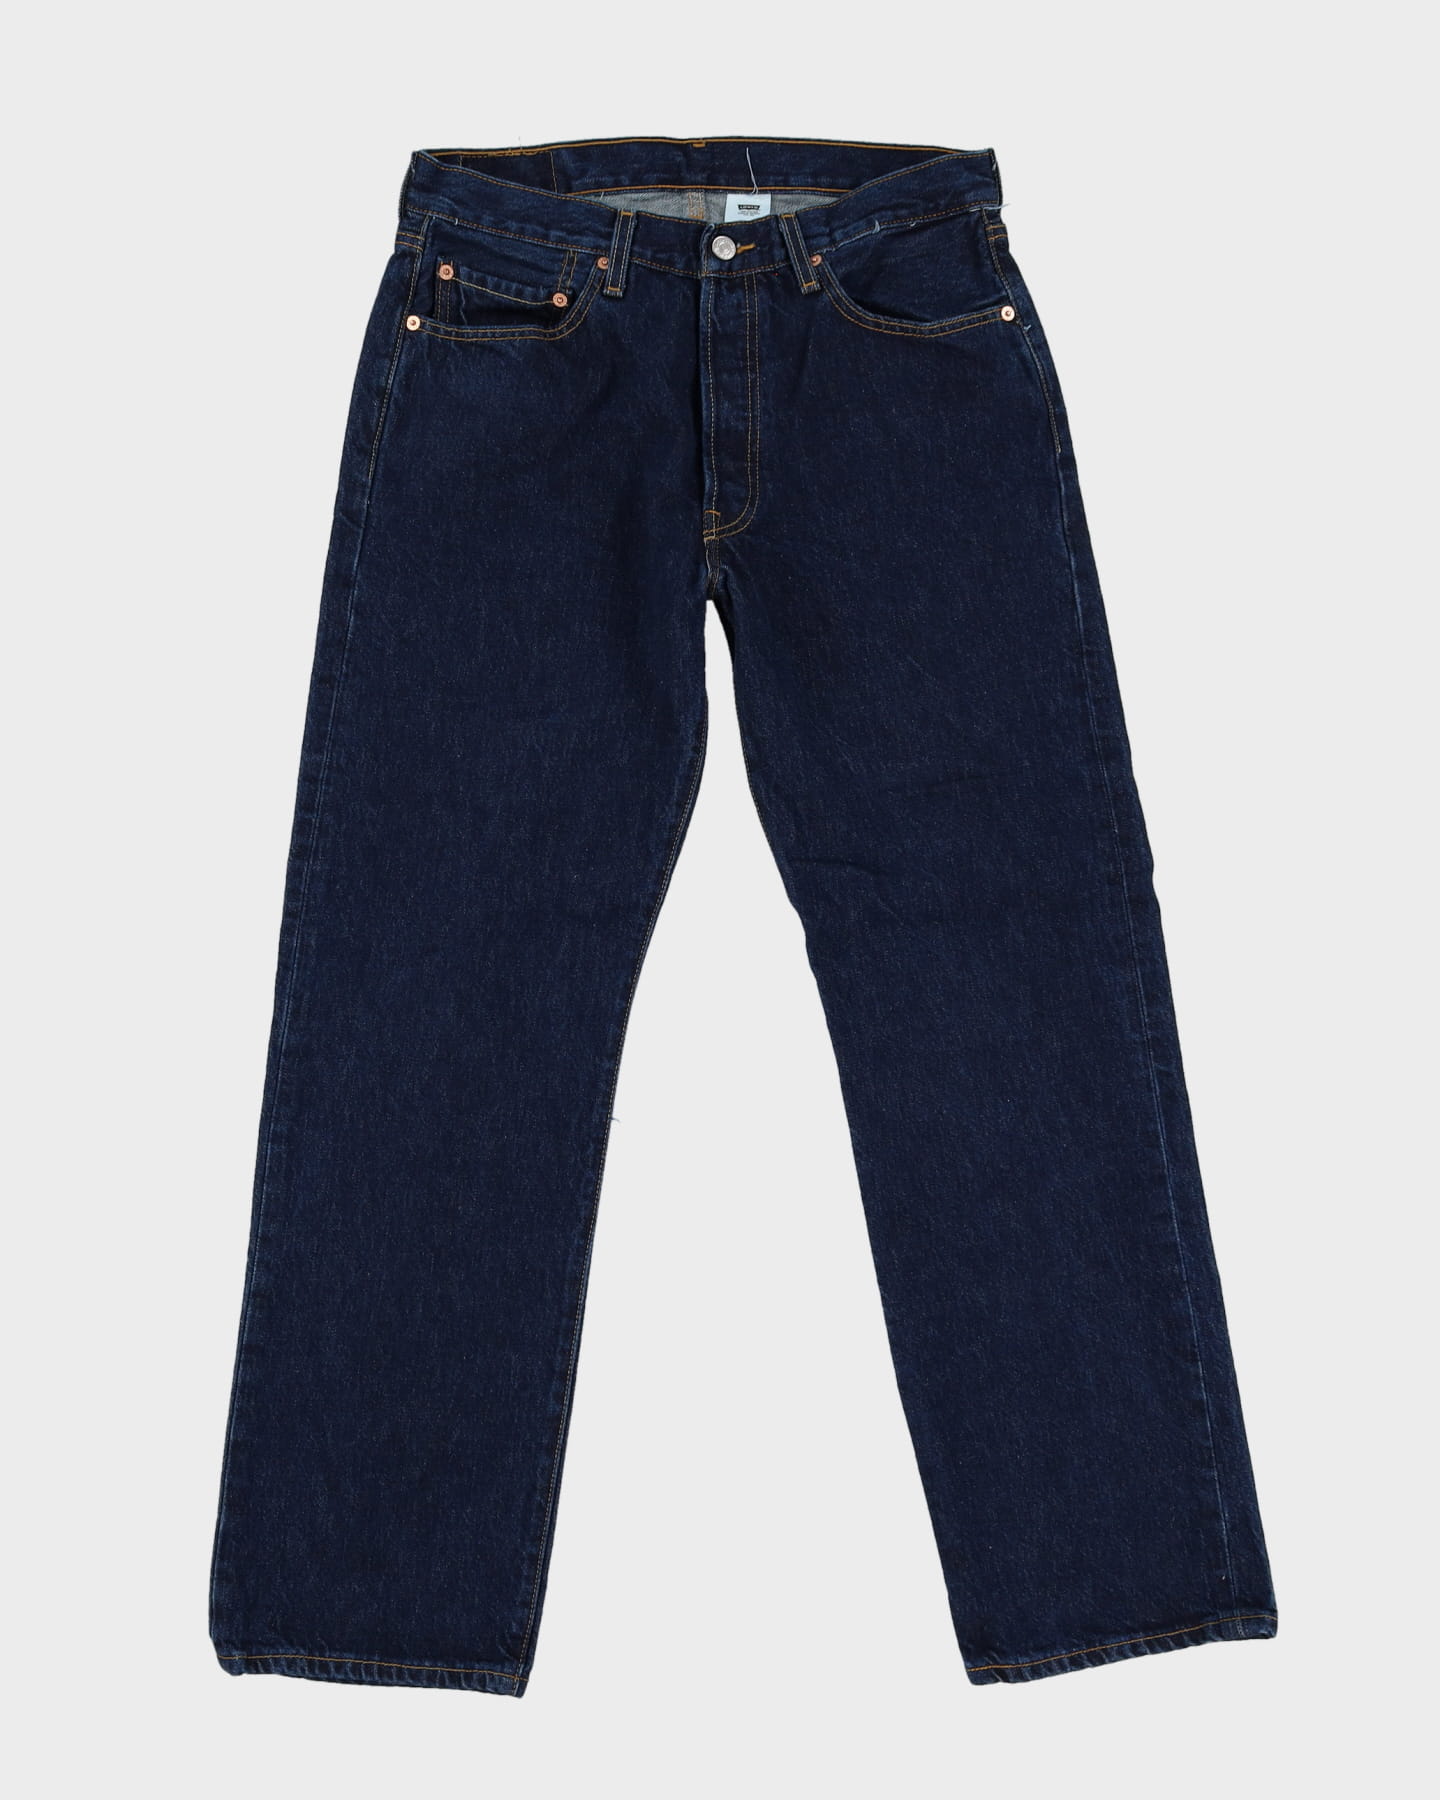 Vintage 80s Levi's 501 Dark Blue Jeans - W32 L31